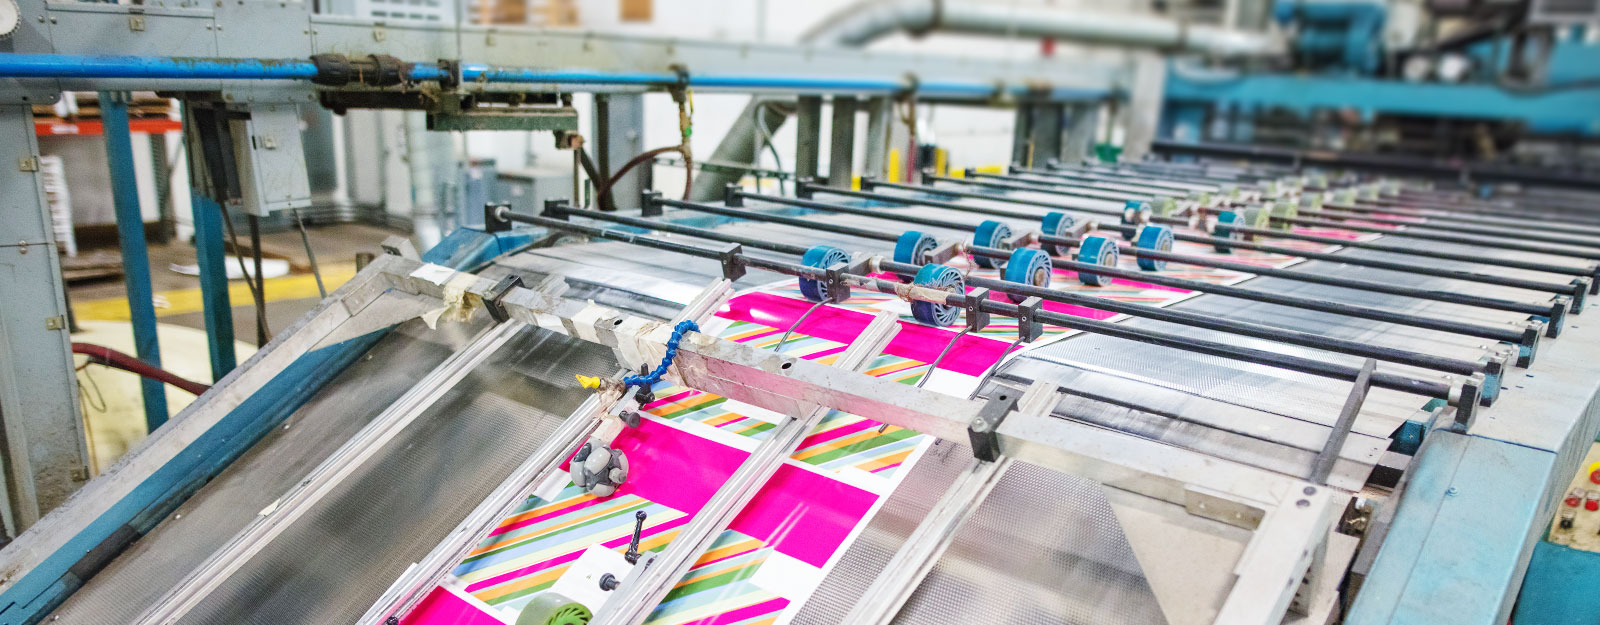 Graphic Packaging Moving Through Printer